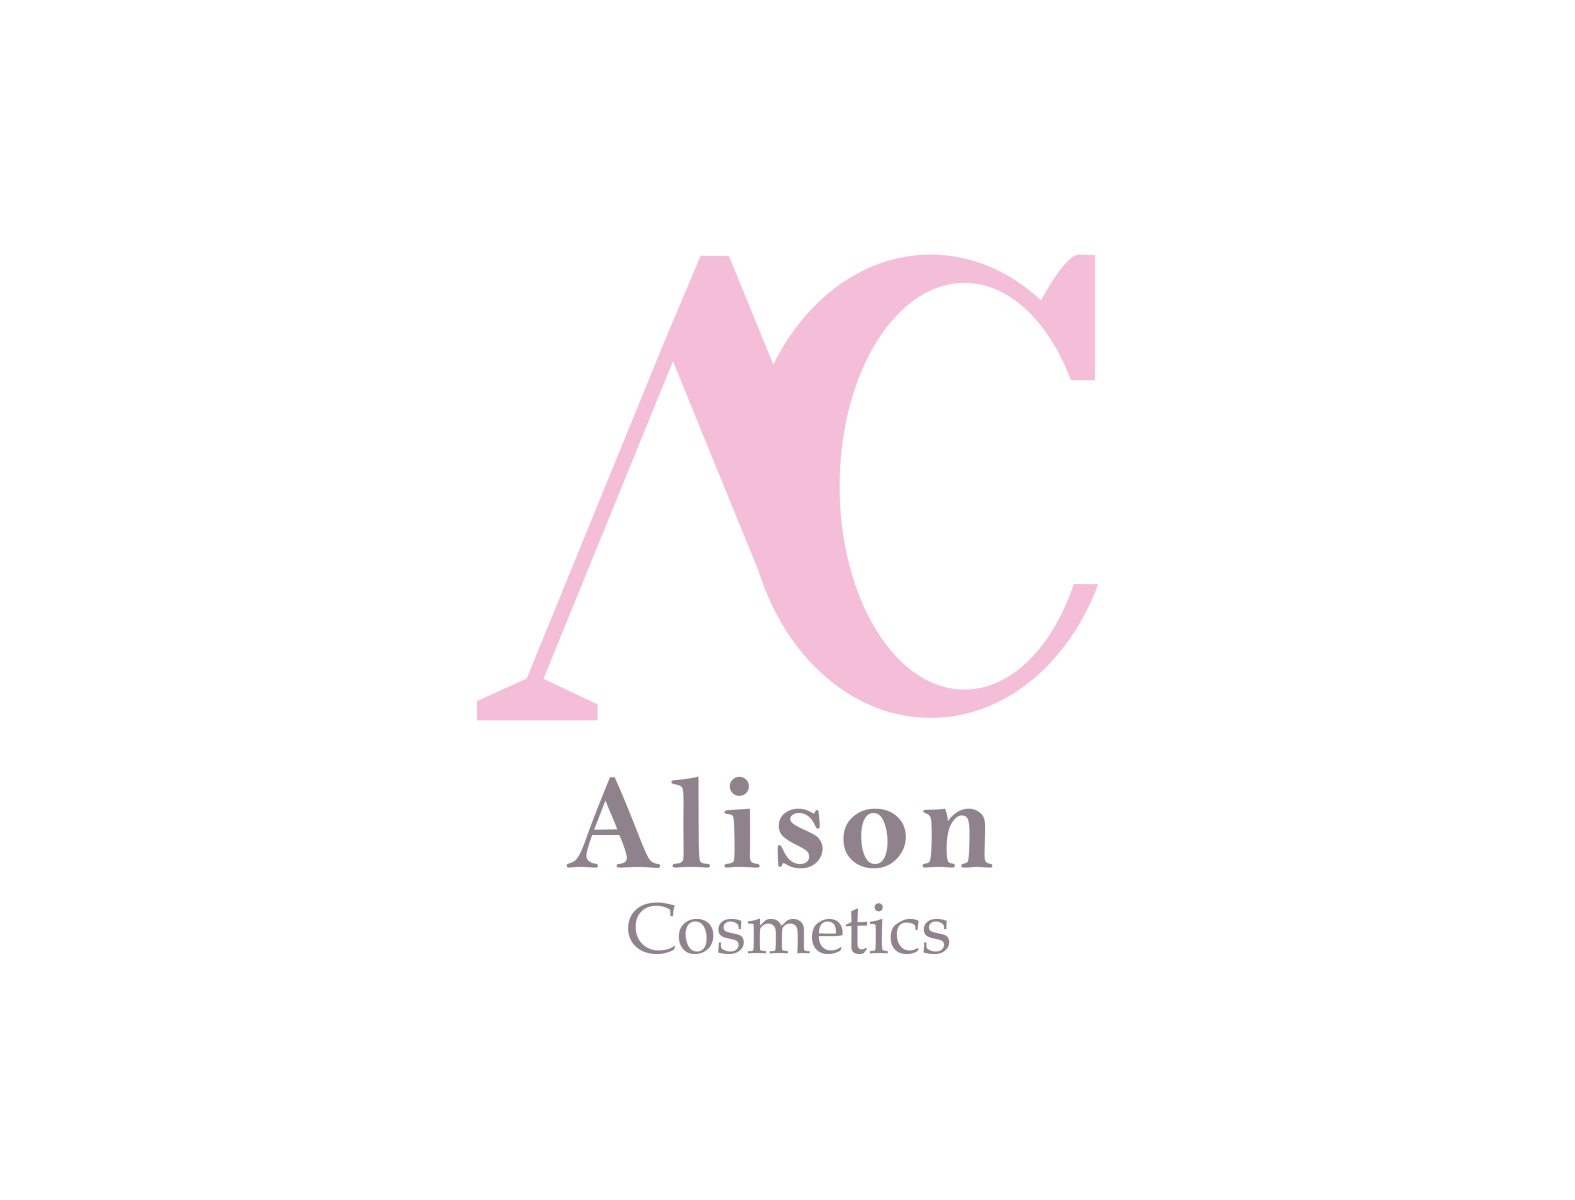 Logo Challenge - Alison Cosmetics by Artistry Stuff on Dribbble